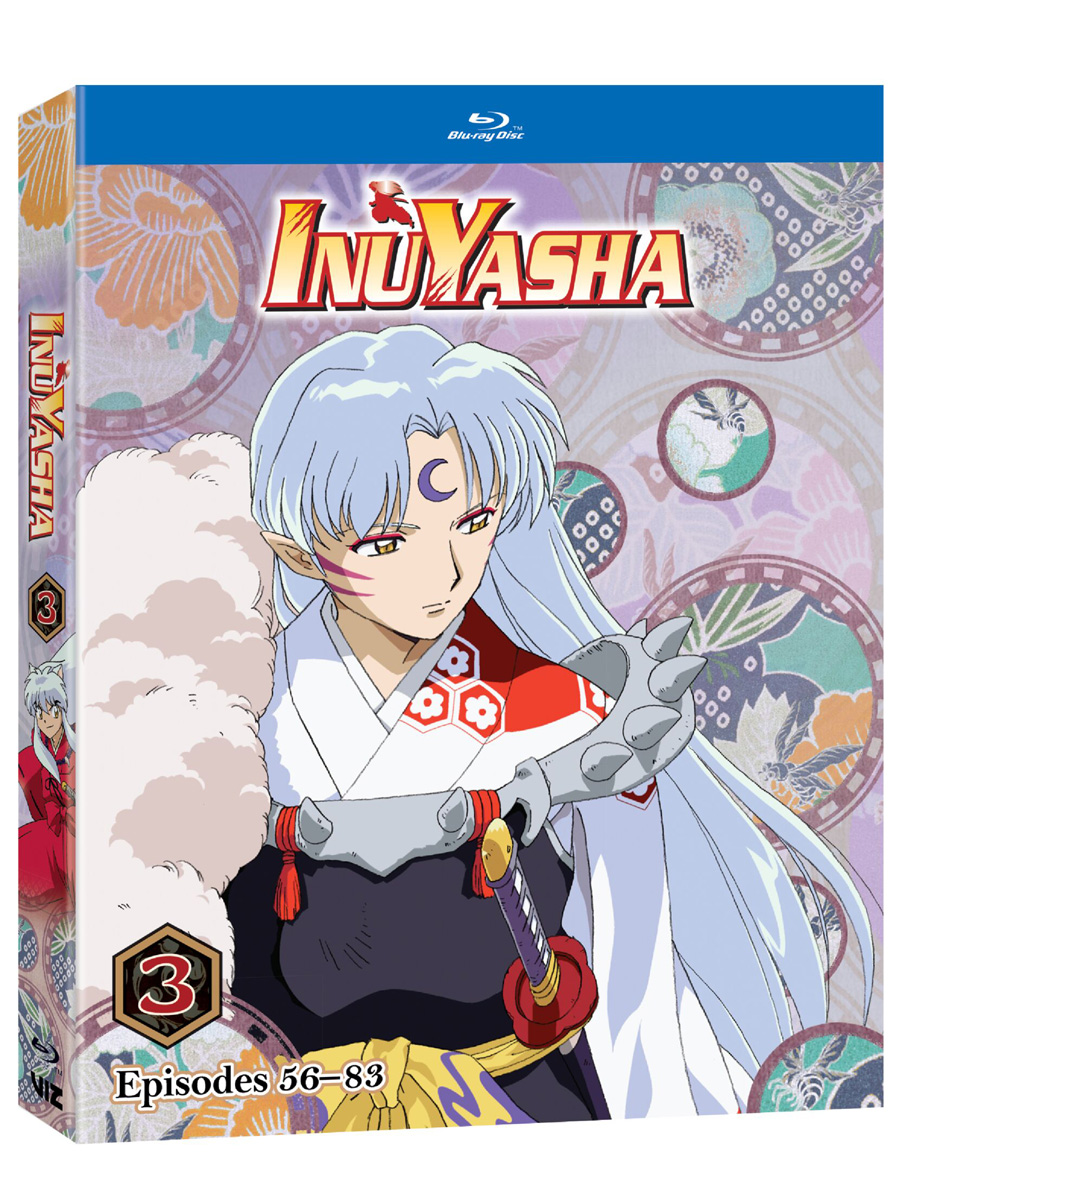 Inuyasha Series Crunchyroll Store